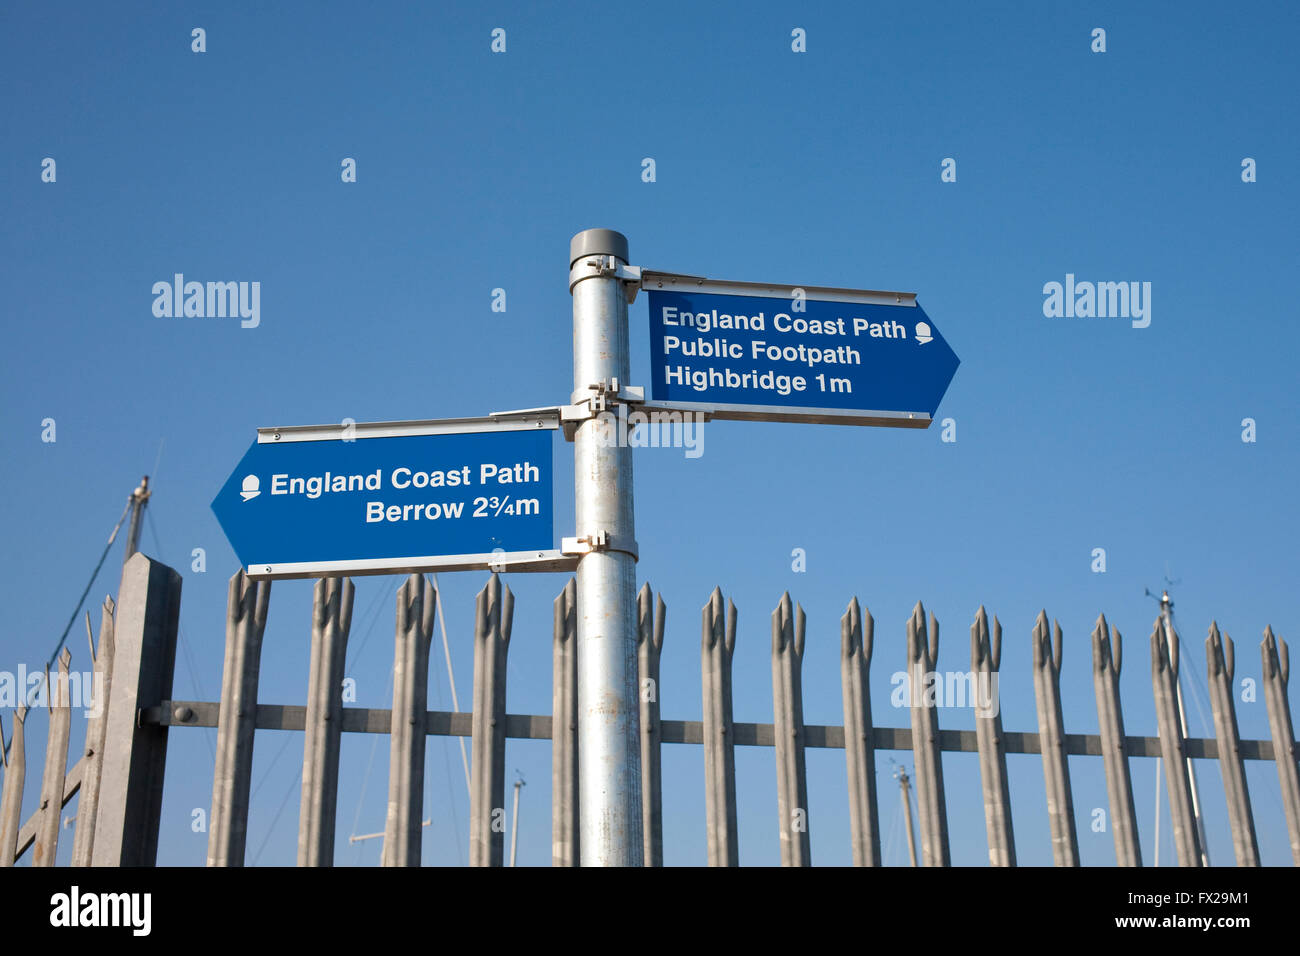 England coast path sign in burnham on sea, on path to berrow and highbridge somerset Stock Photo